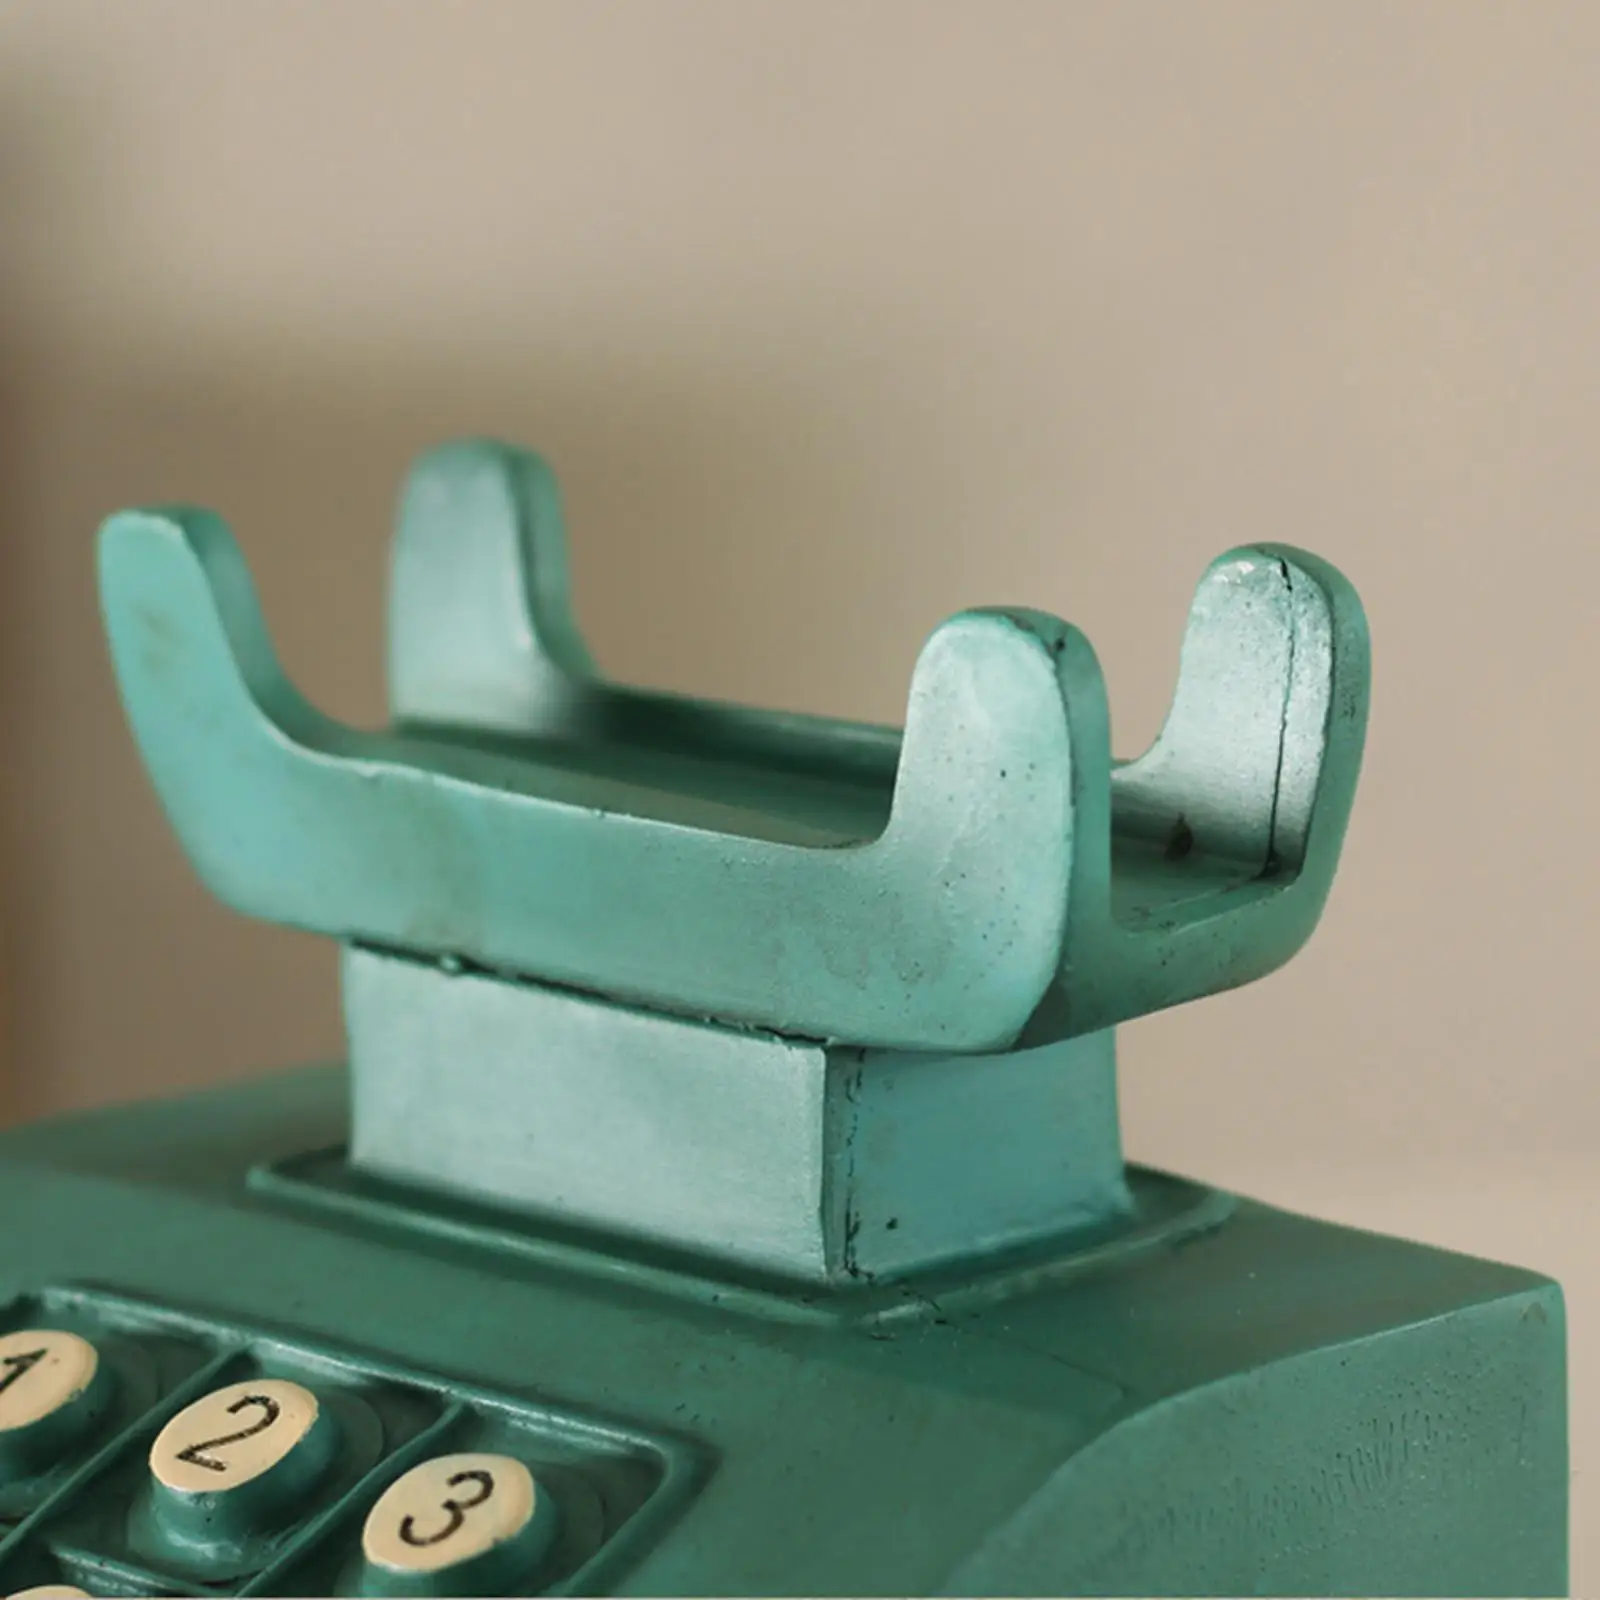 Creative American Telephone Model Figurine Resin Craft for Desktop Cafe Bar Hotel Decor